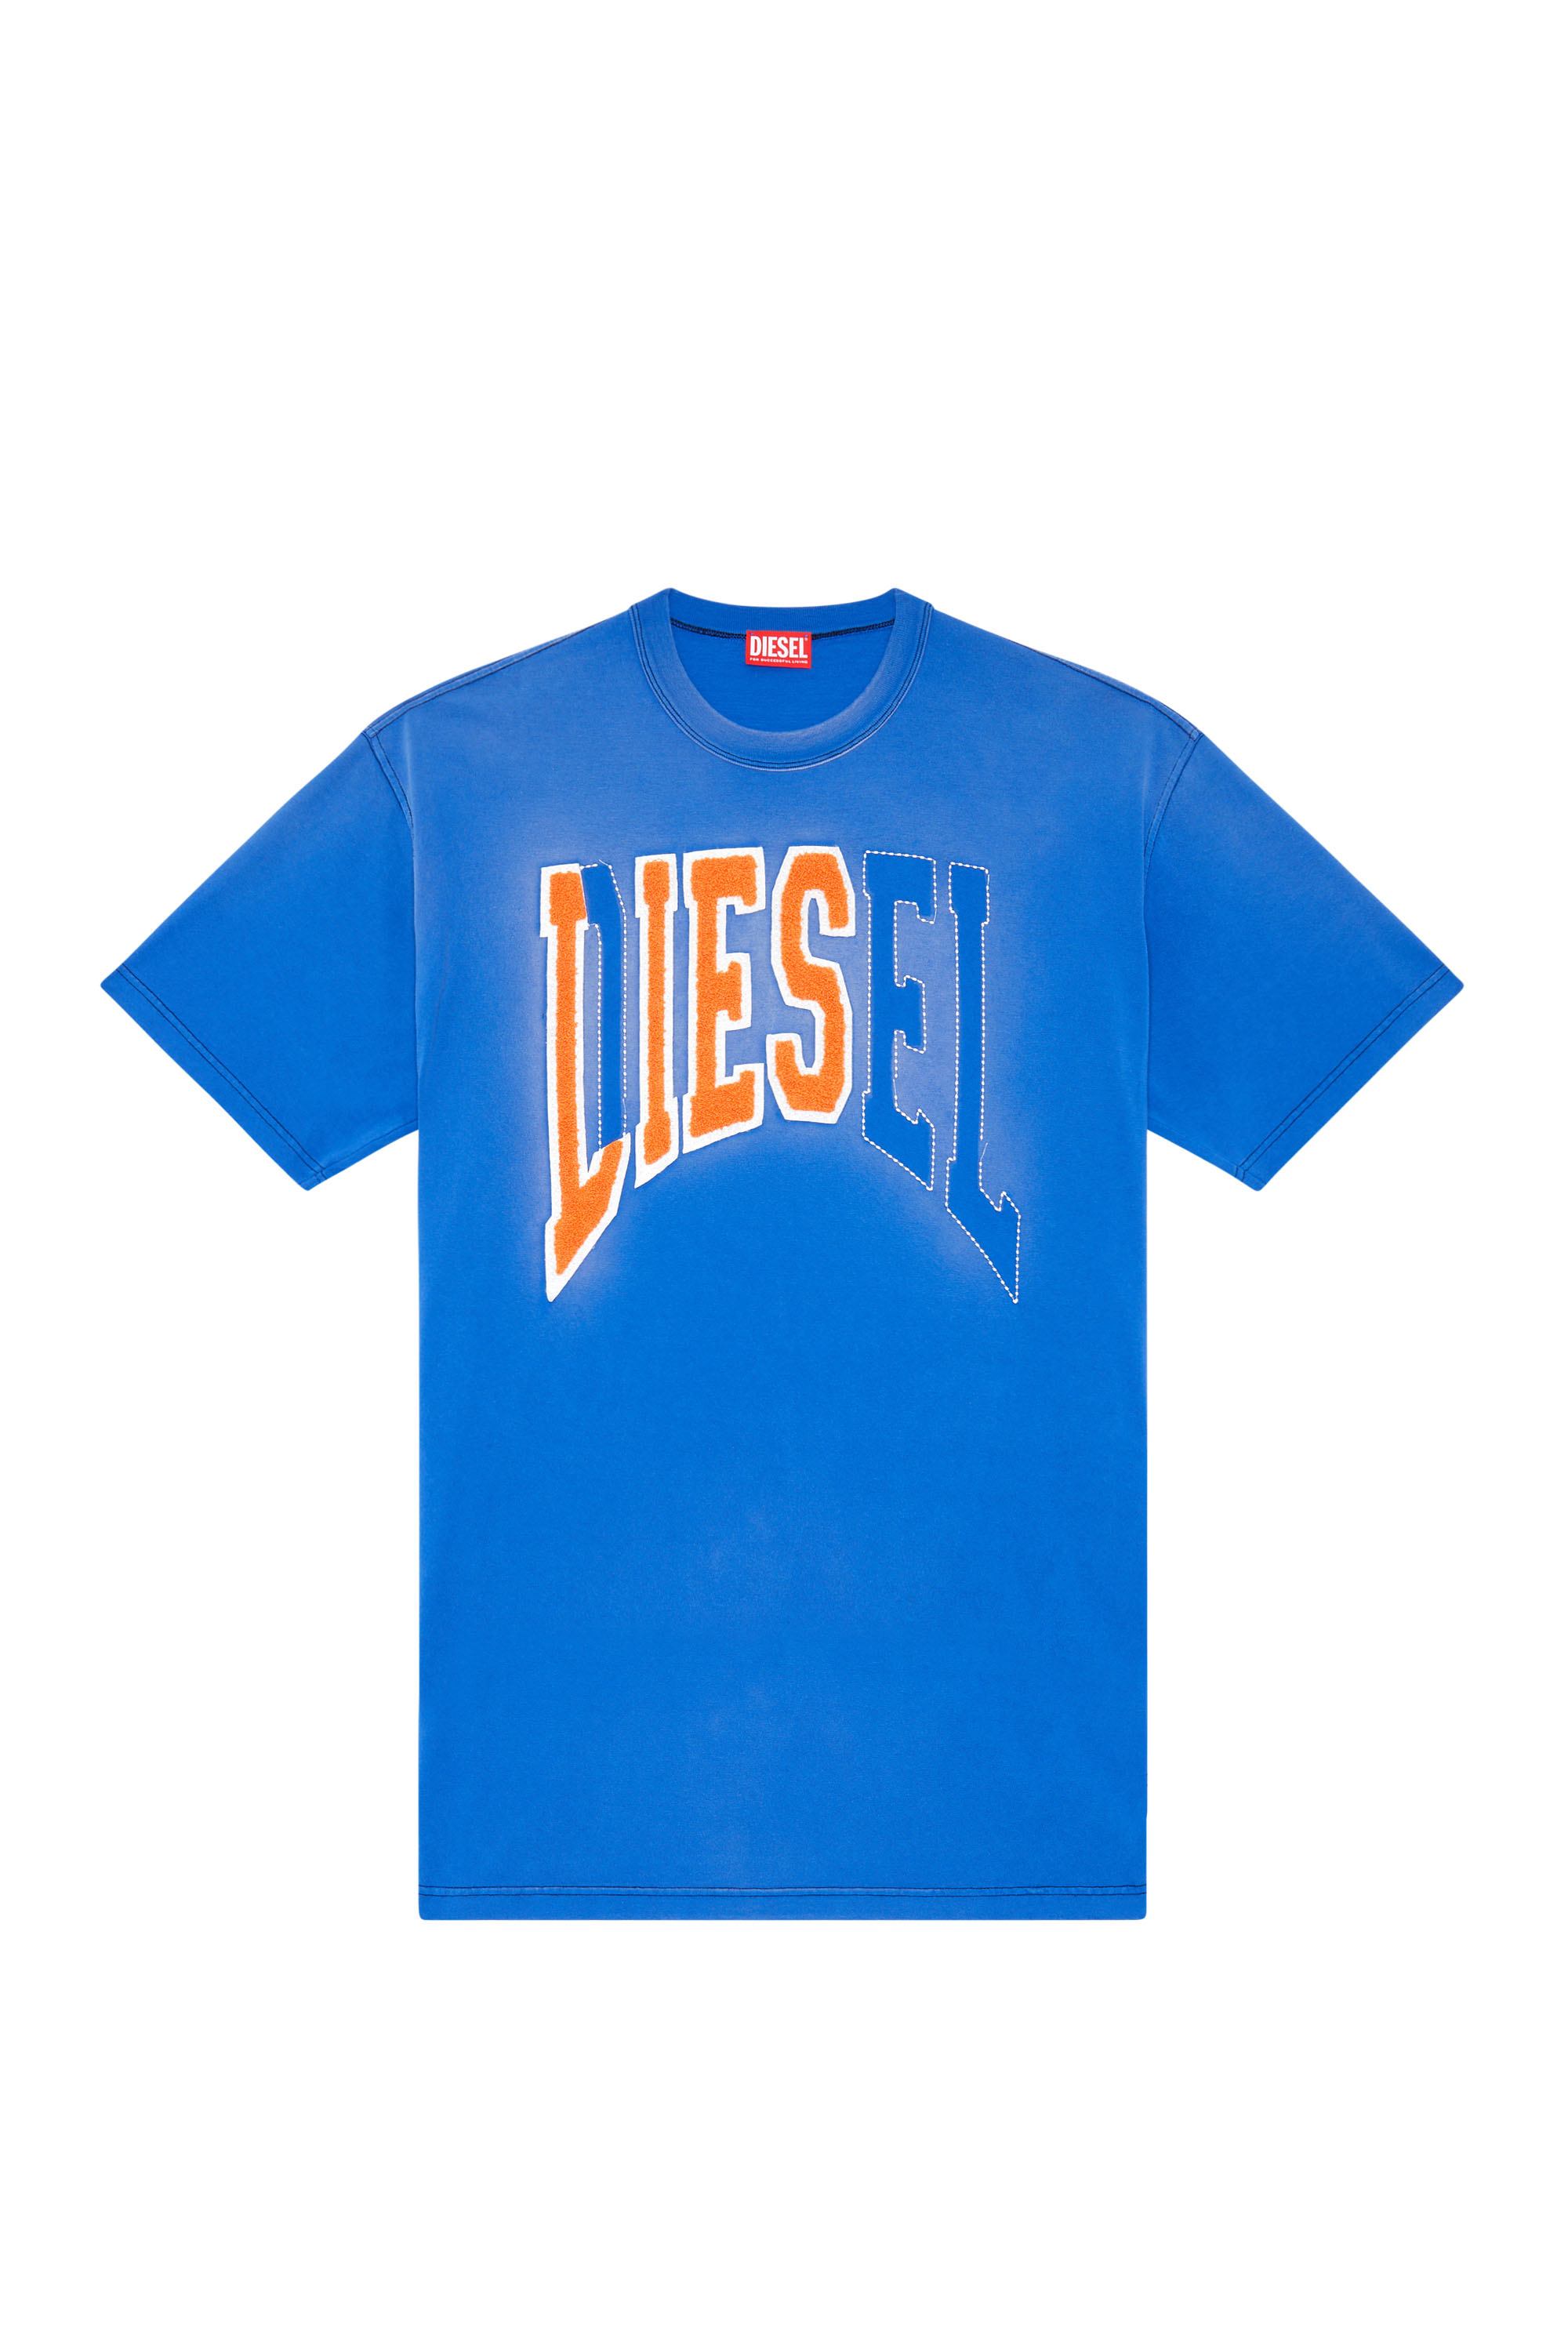 Diesel - T-WASH-N, Homme T-shirt oversize avec logo Diesel Lies in Bleu - Image 4